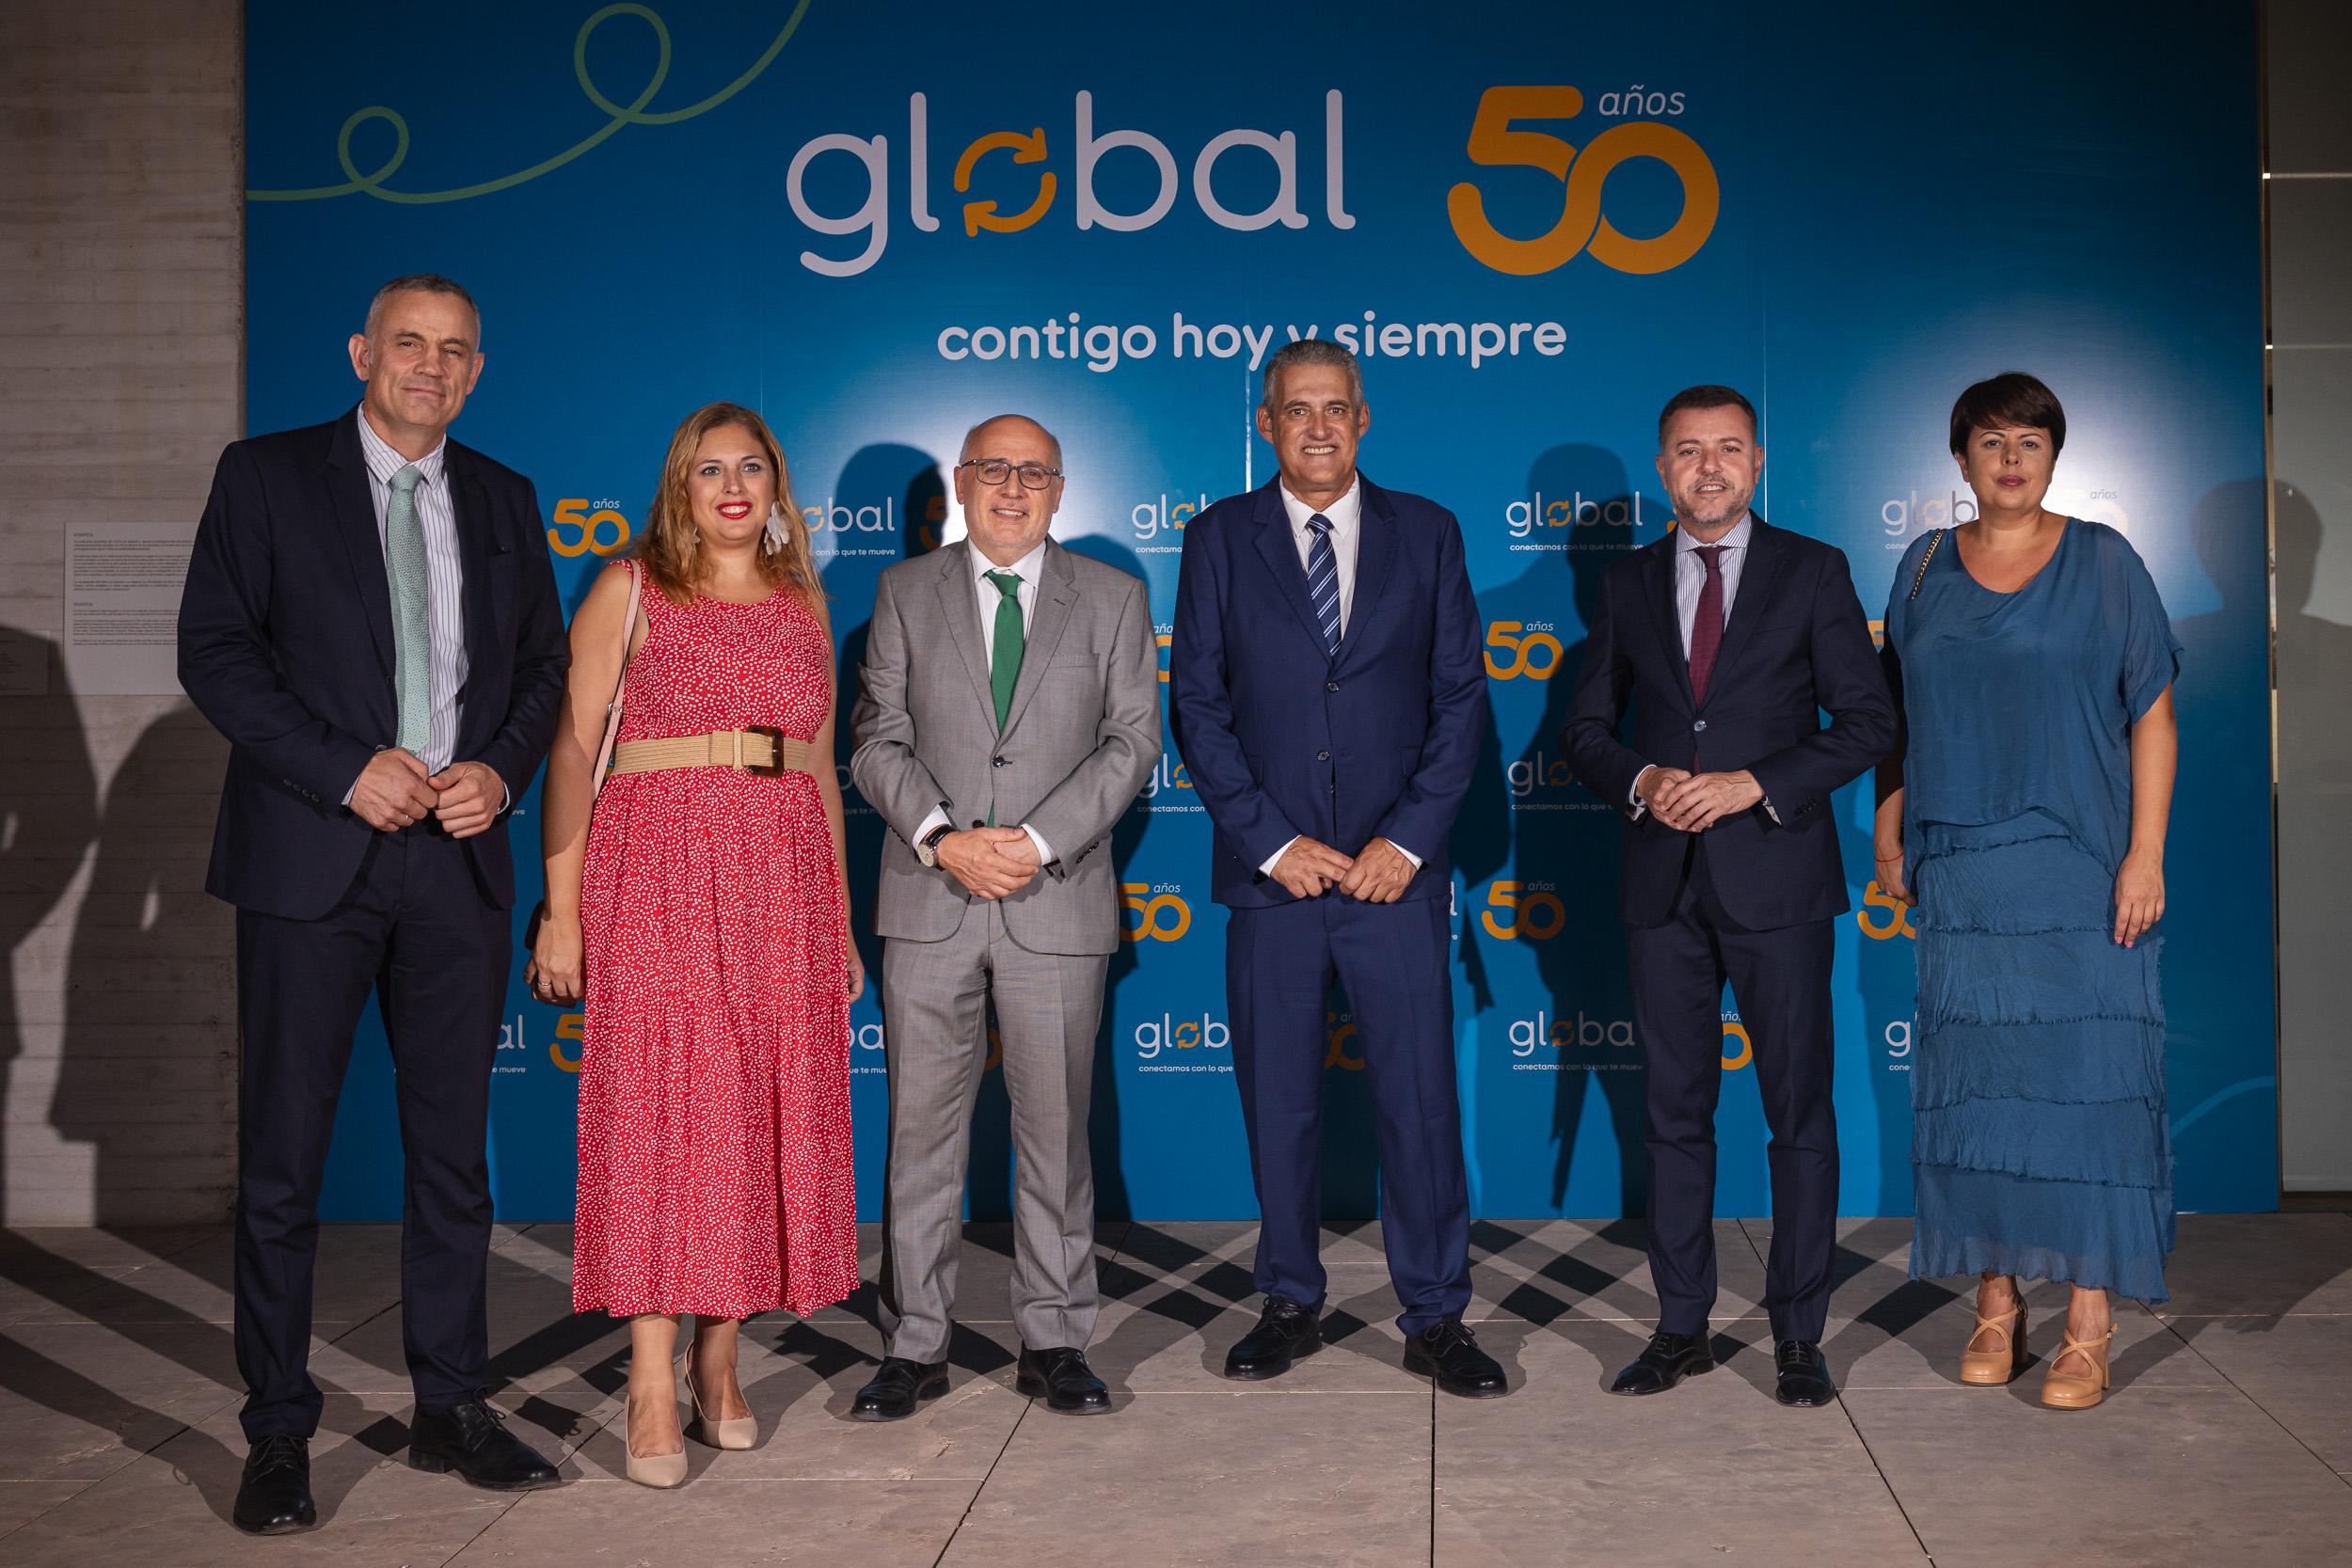 Global celebra su 50 aniversario / CanariasNoticias.es 